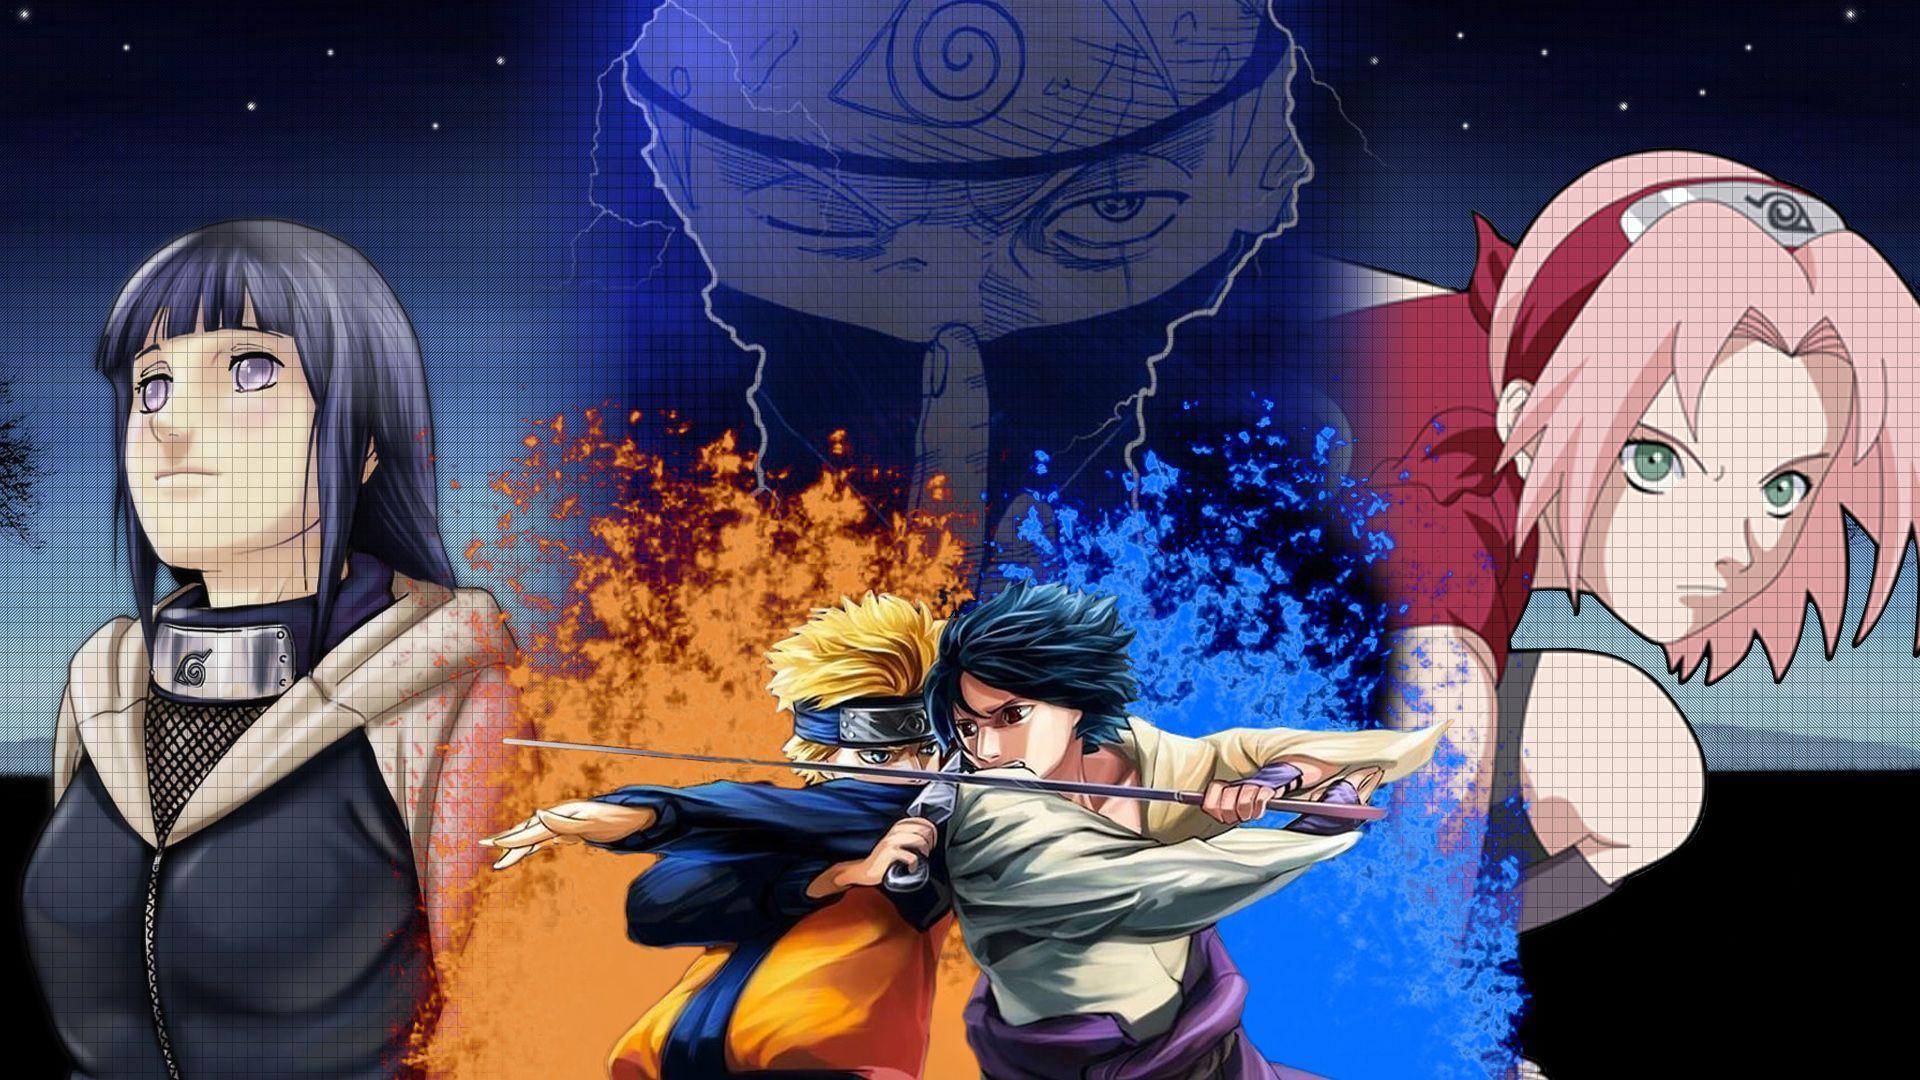 Naruto and Sakura Lovers Ms Paint Wallpaper by JordanSanchez on DeviantArt